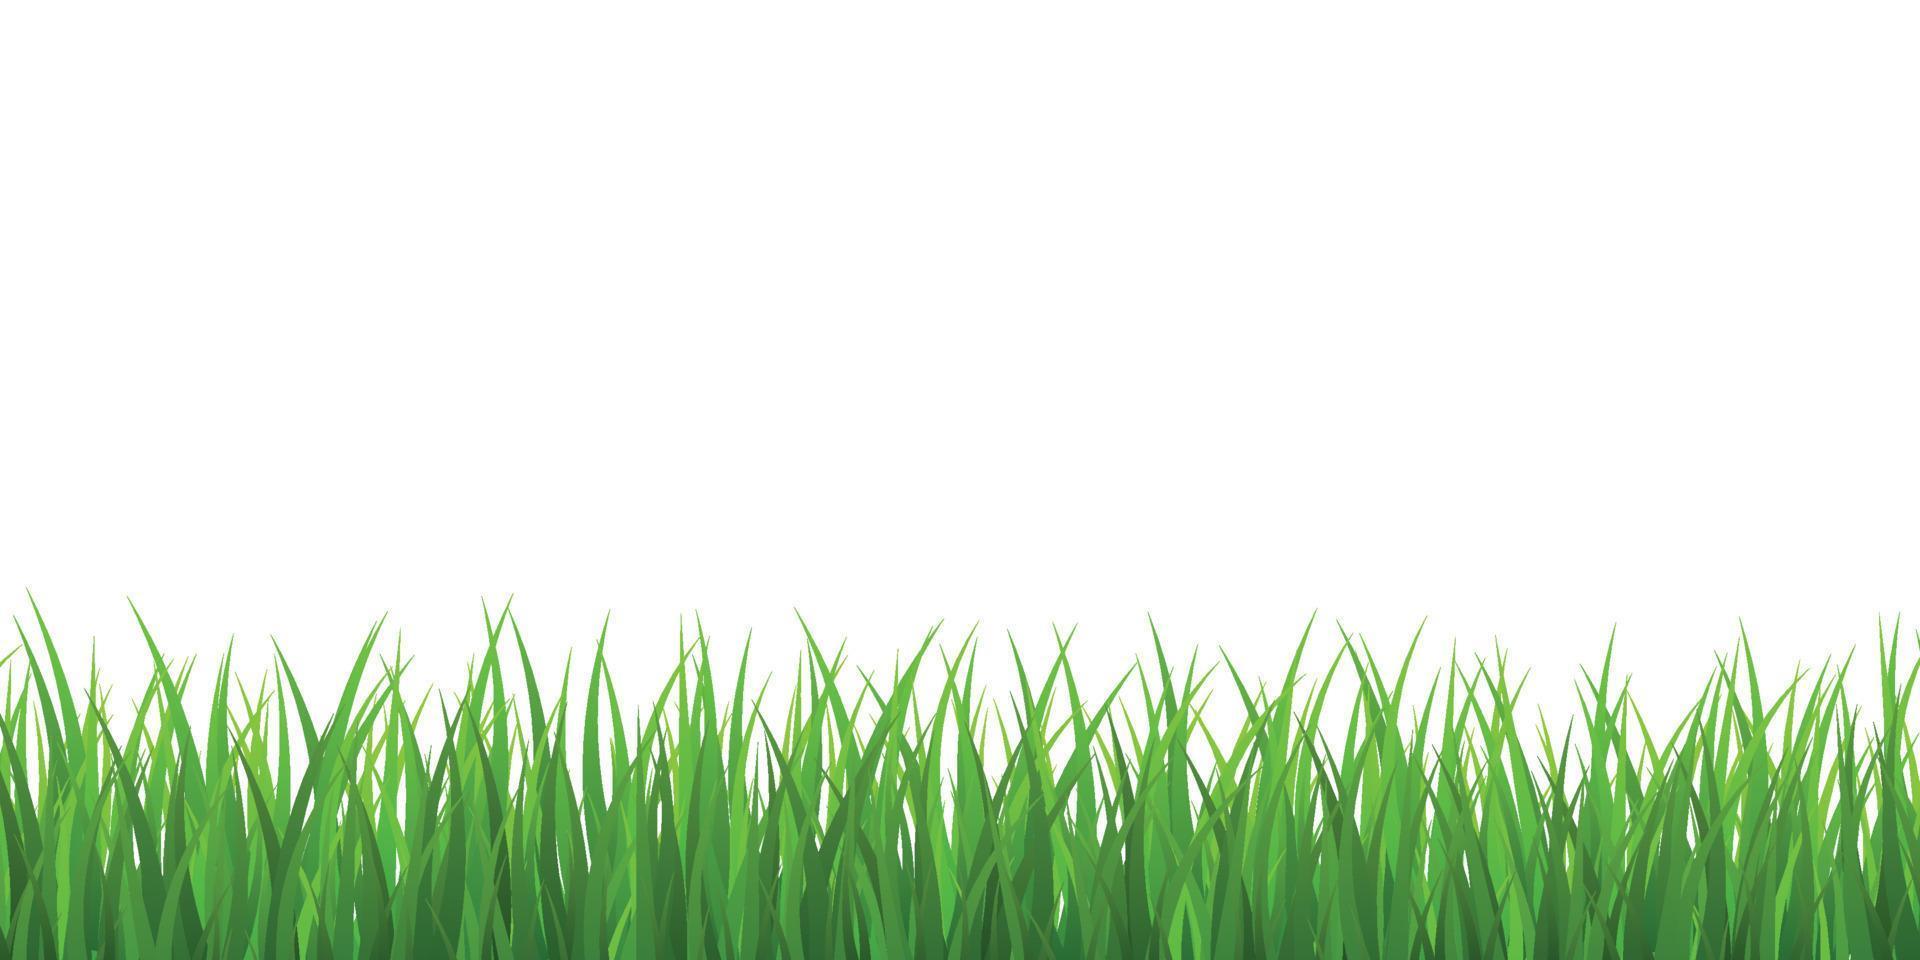 frische grüne grasgrenze vektor